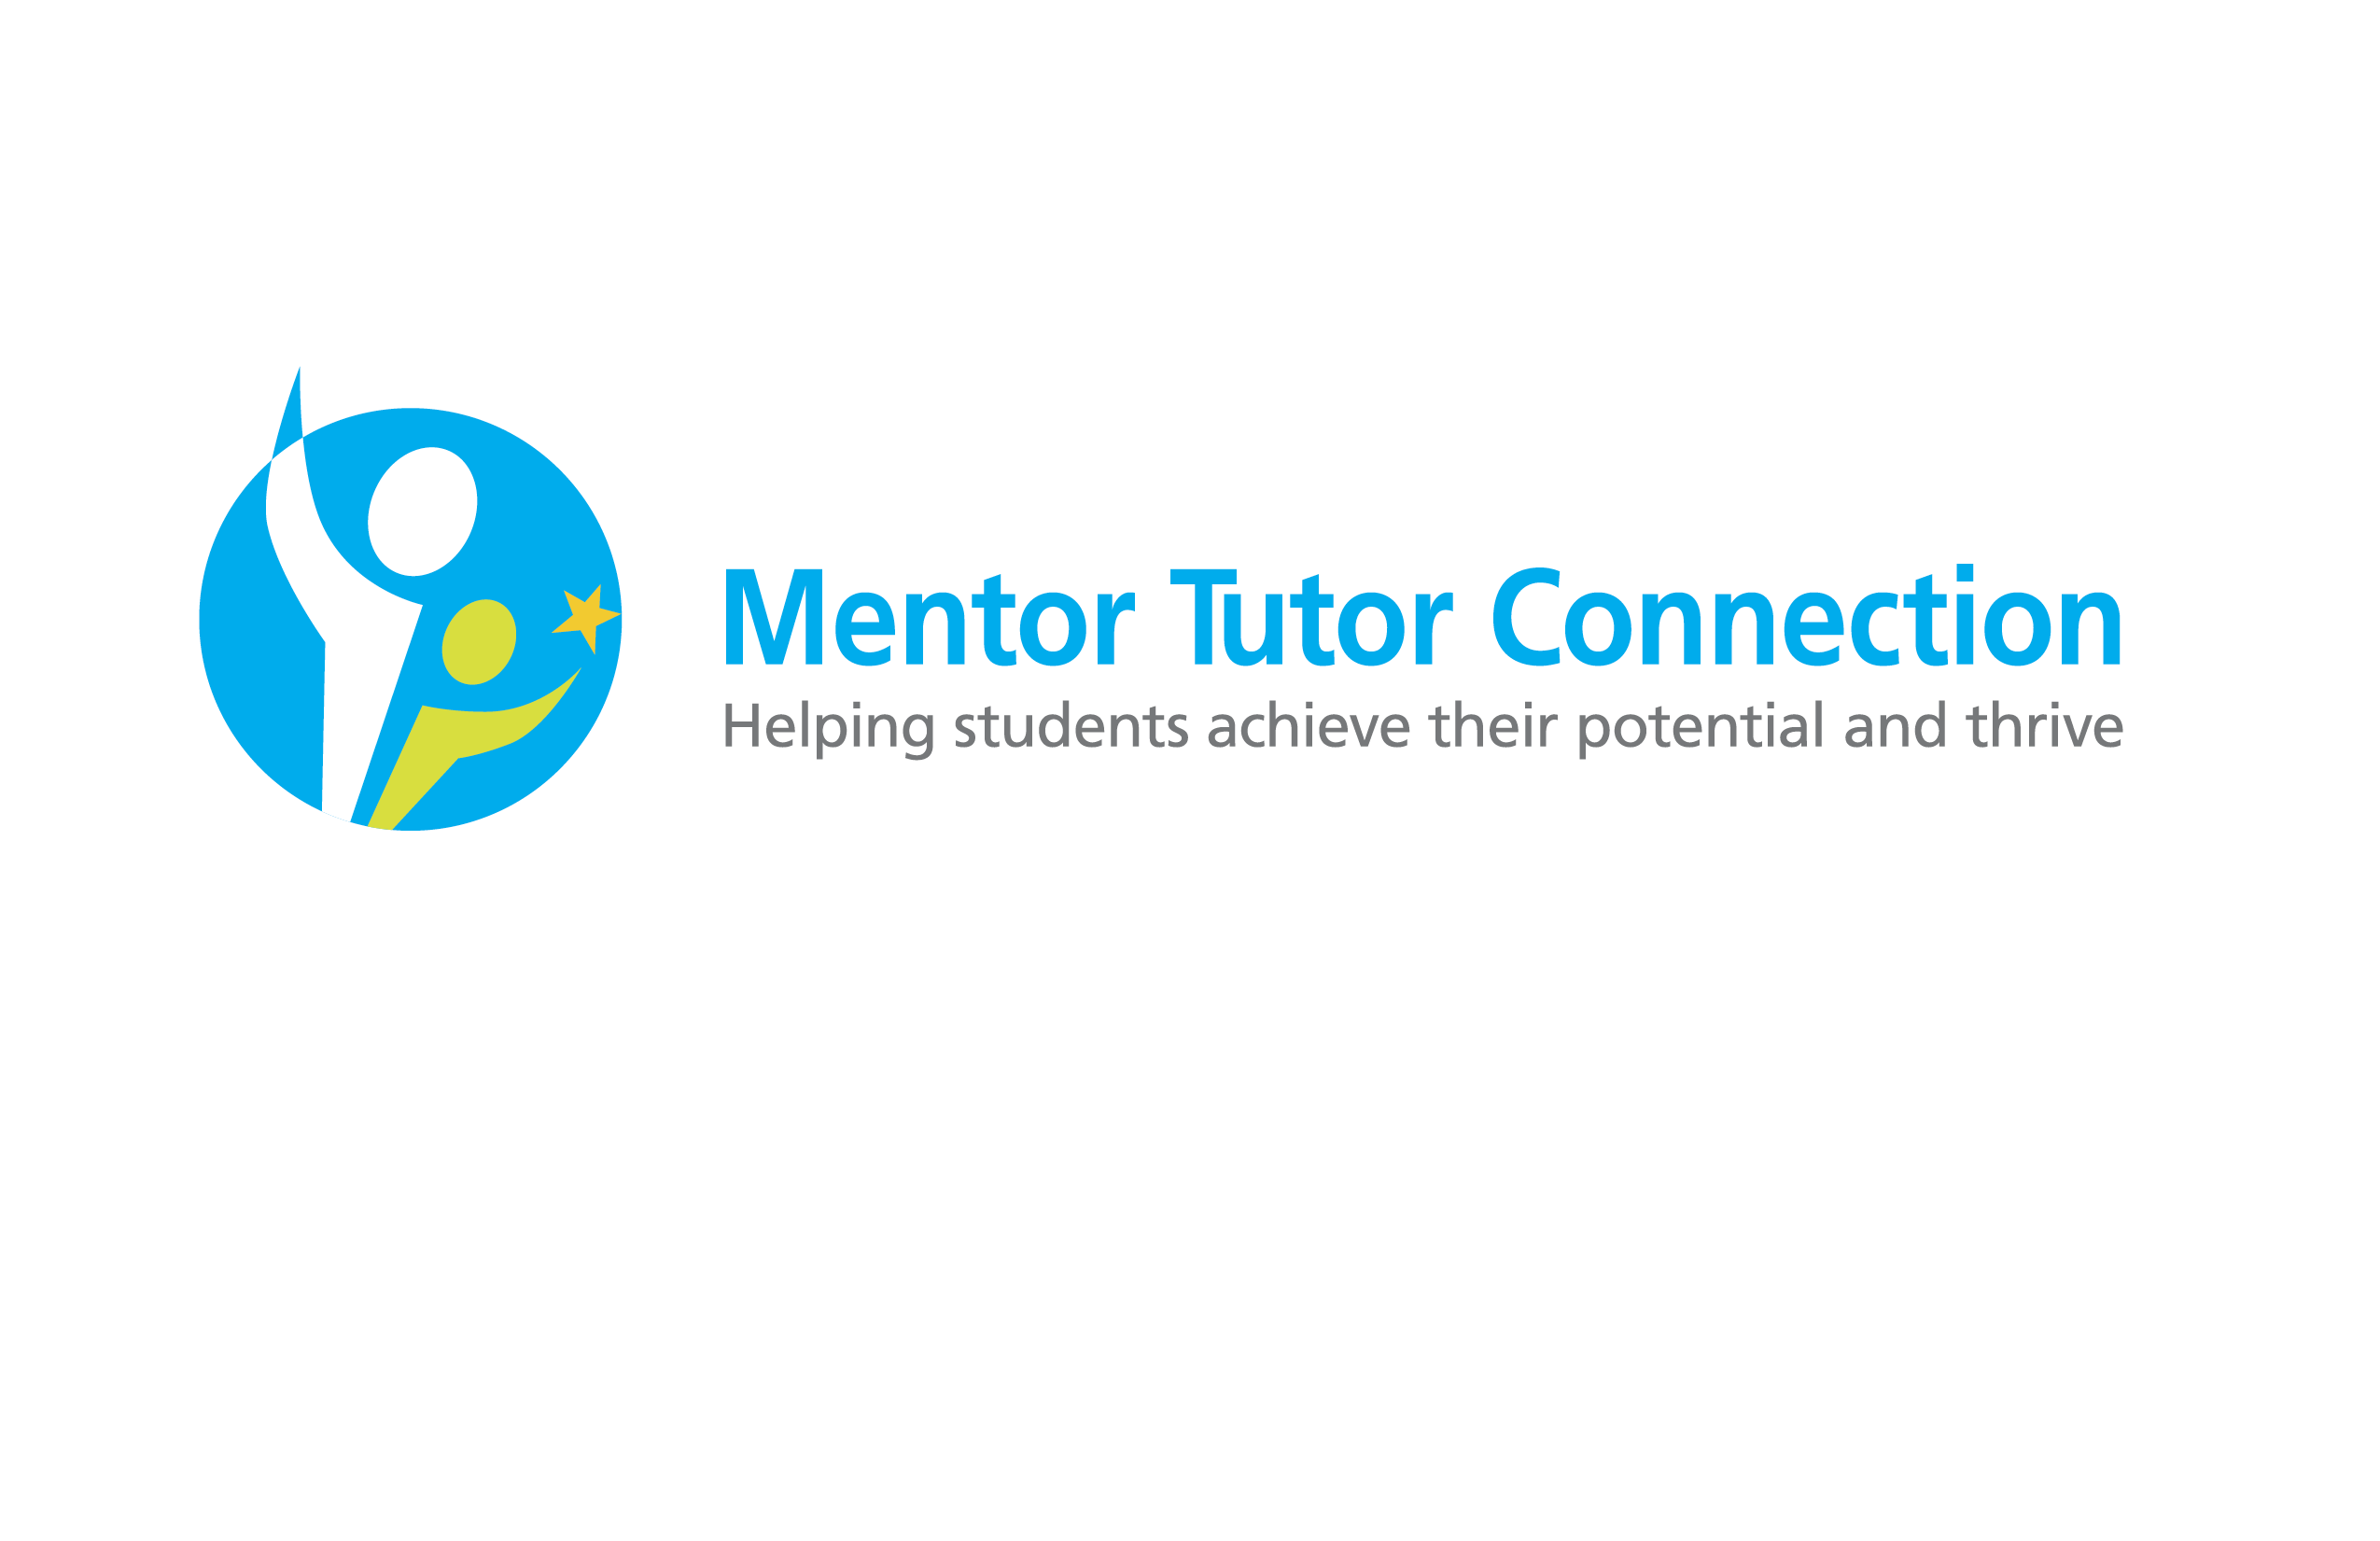 Mentor Tutor Connection